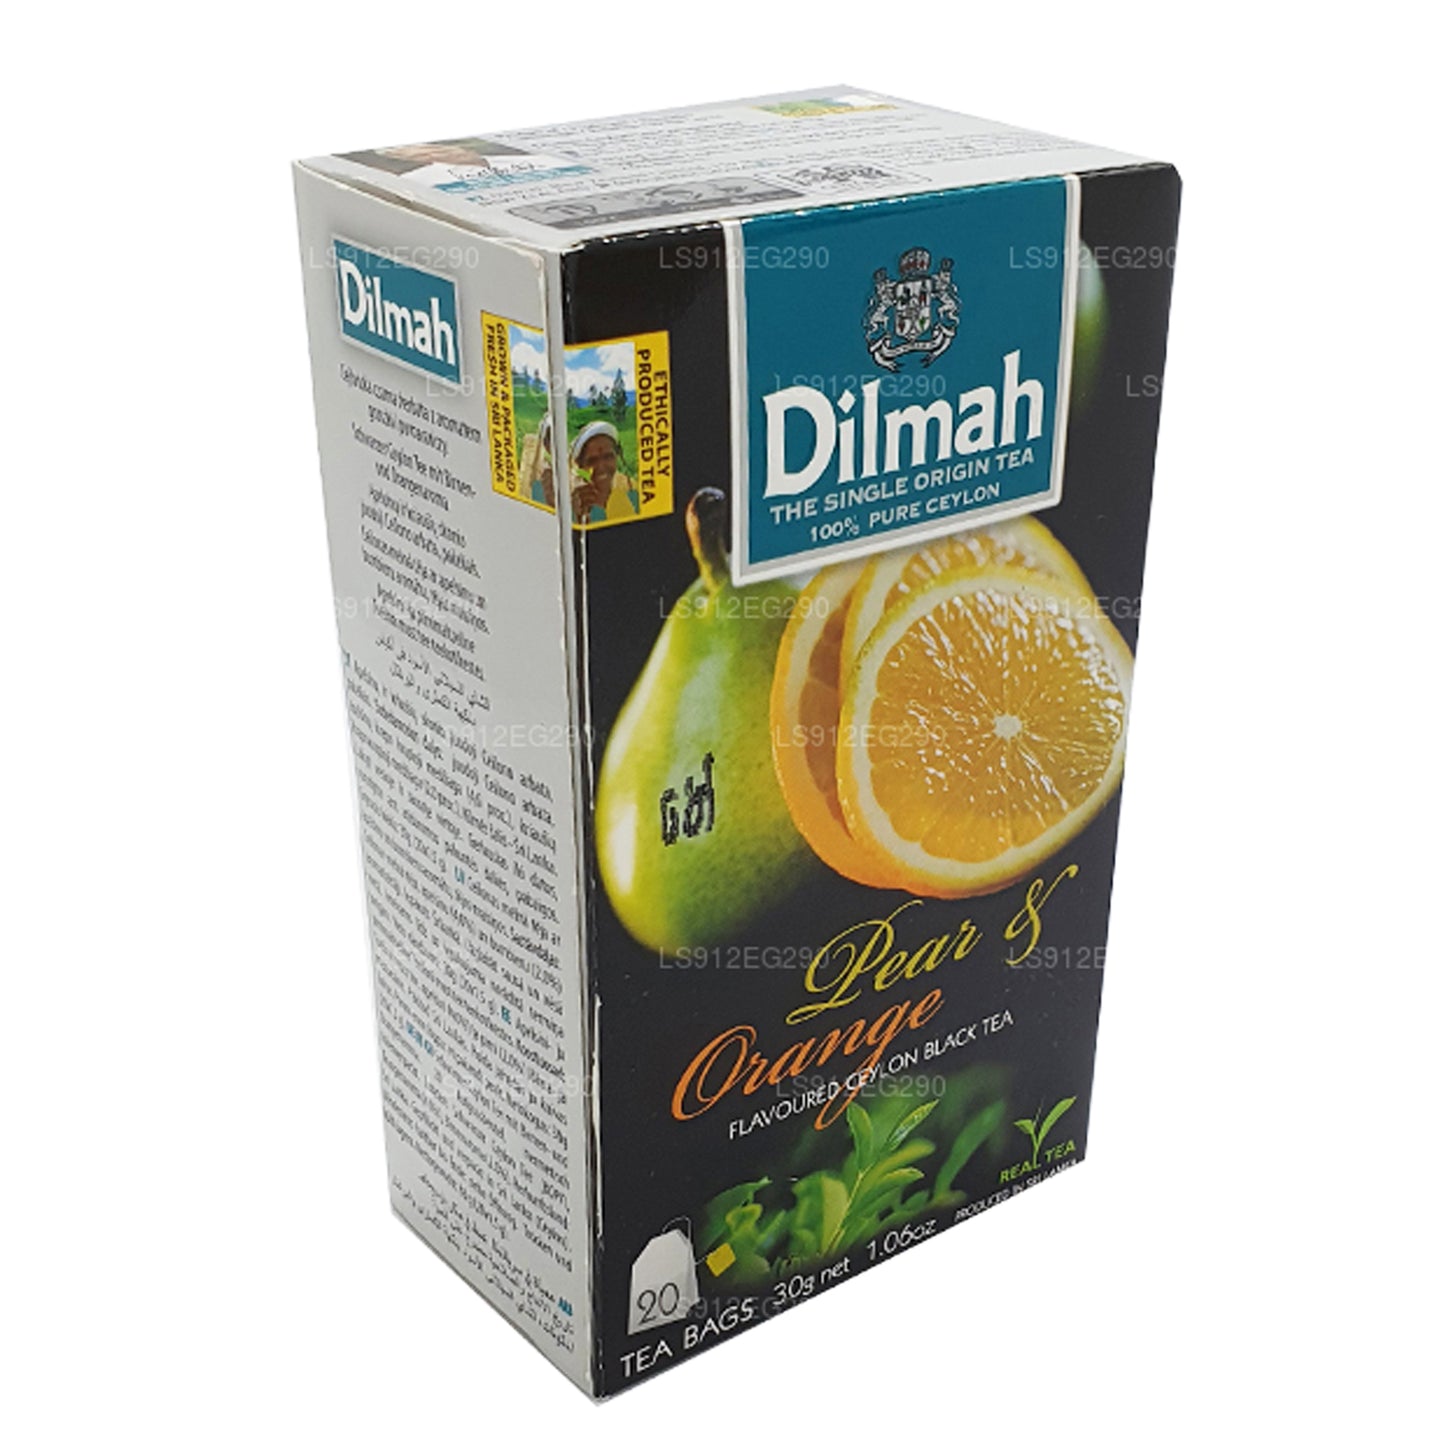 Dilmah Pear and Orange Flavored Ceylon Black Tea (30g) 20 Tea Bags